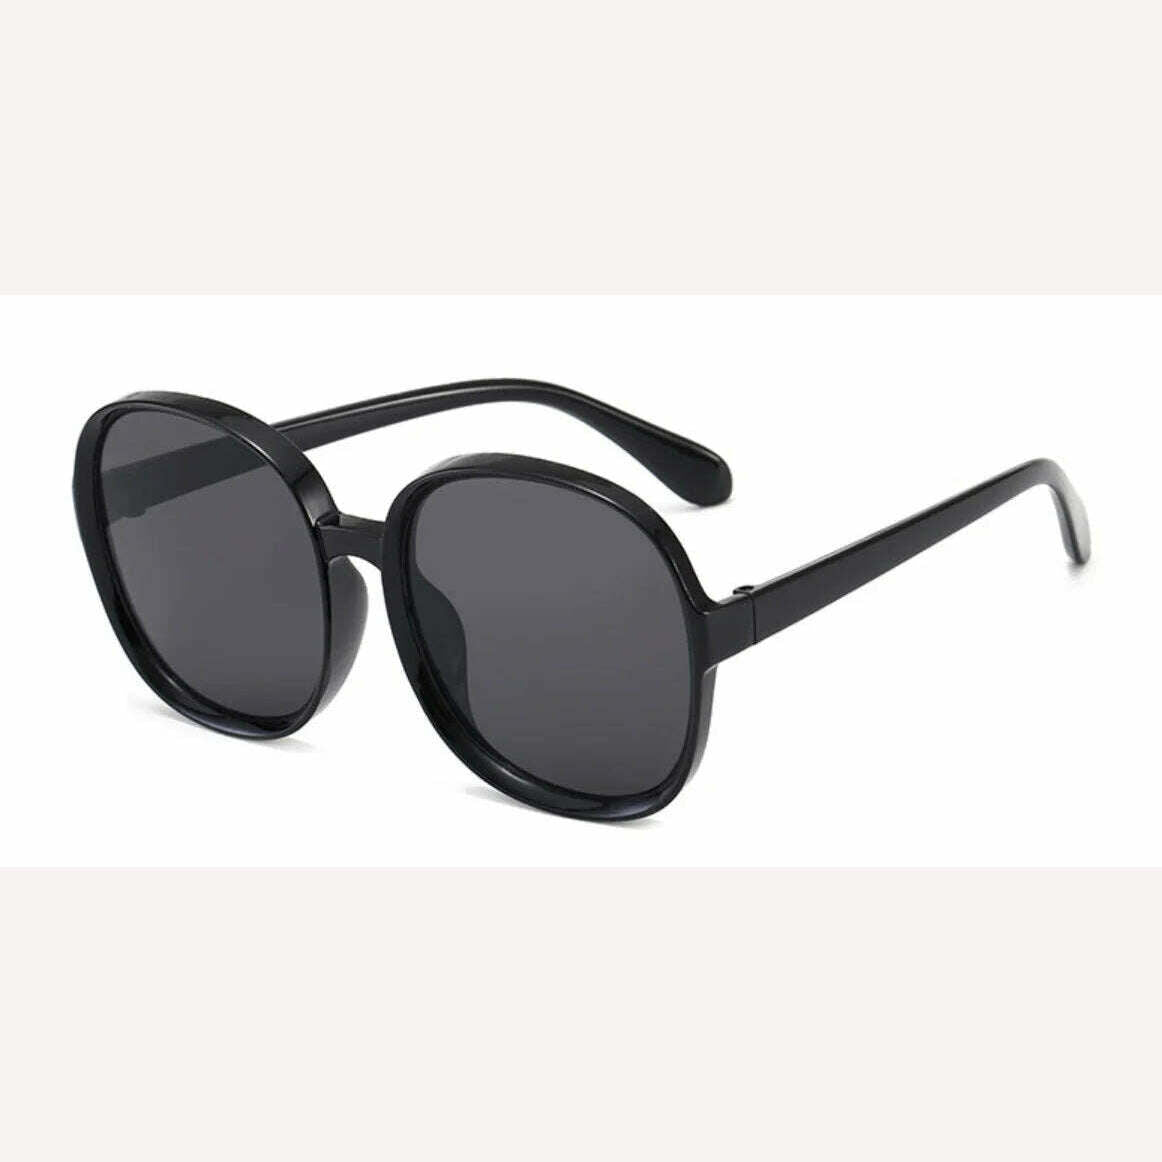 KIMLUD, 2021 Plastic Classic Vintage Woman Sunglasses Oversized Round Frame Luxury Brand Designer Female Glasses Big Shades Oculos, Black Gray, KIMLUD Womens Clothes